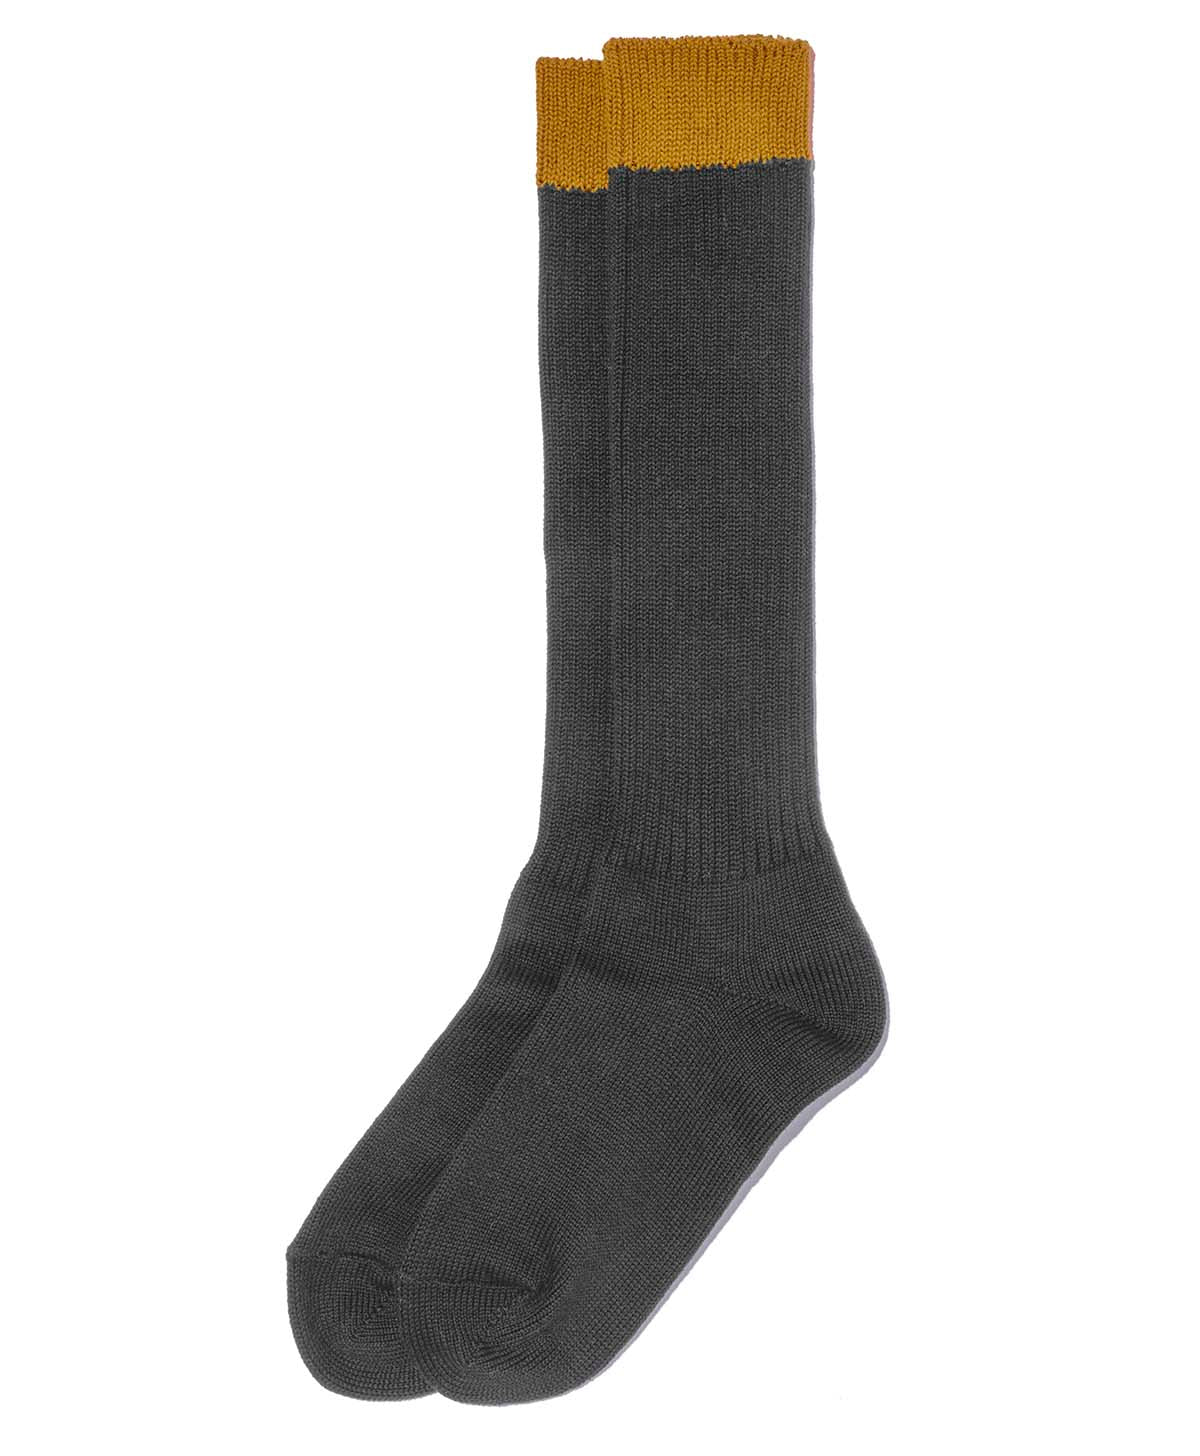 BOOTS SOCKS / Charcoal Gray/Yellow (Women's)